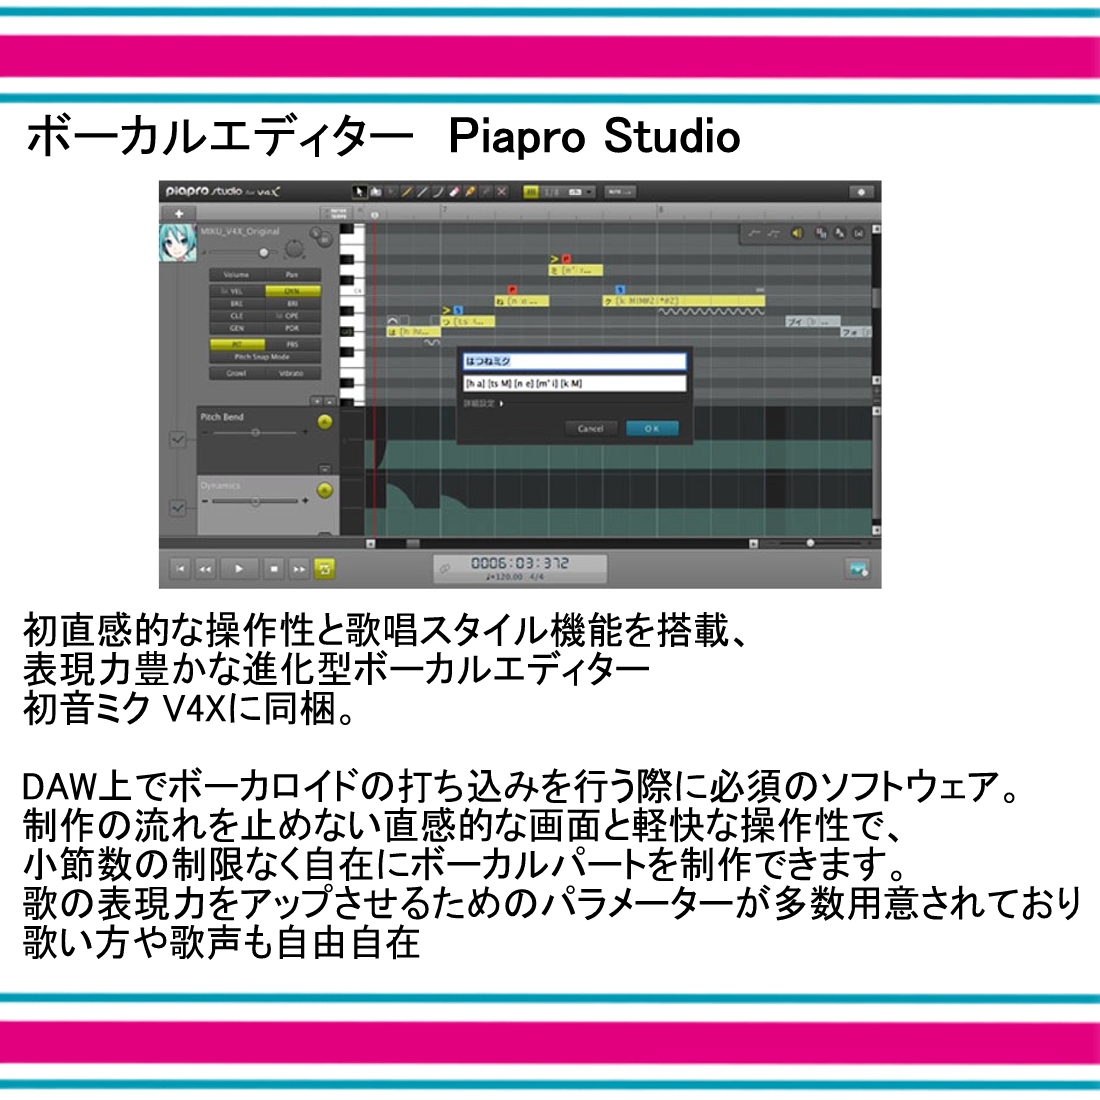  Hatsune Miku V4X Vocaloid starter set MIKU V4X Vocaloid klip ton Japanese edition VOCALOID4